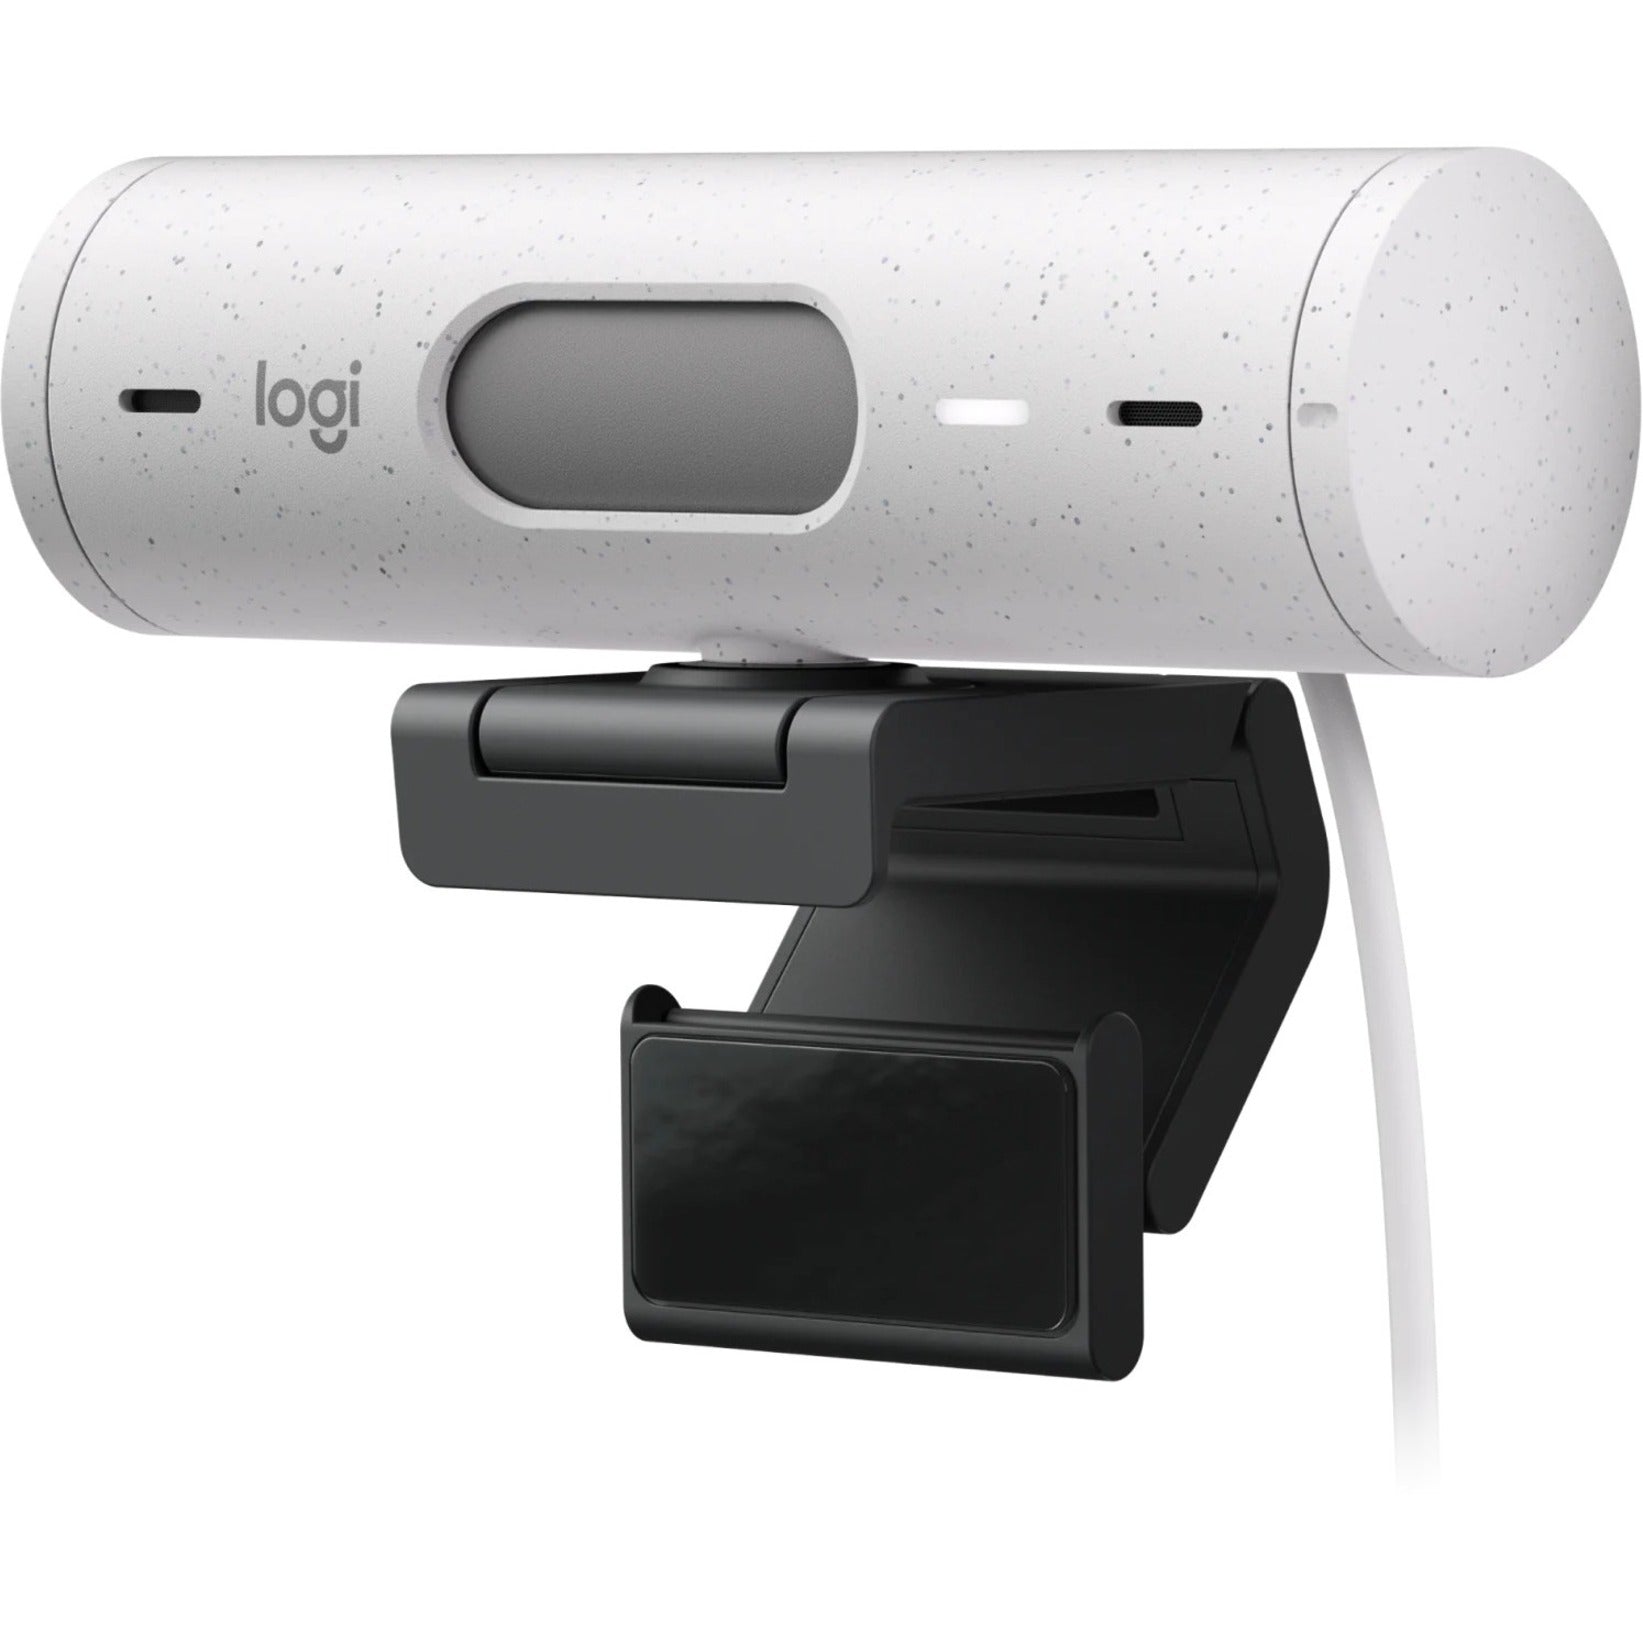 Logitech 960-001454 BRIO 505 Webcam, 4 Megapixel, 60 fps, USB Type C, Off White